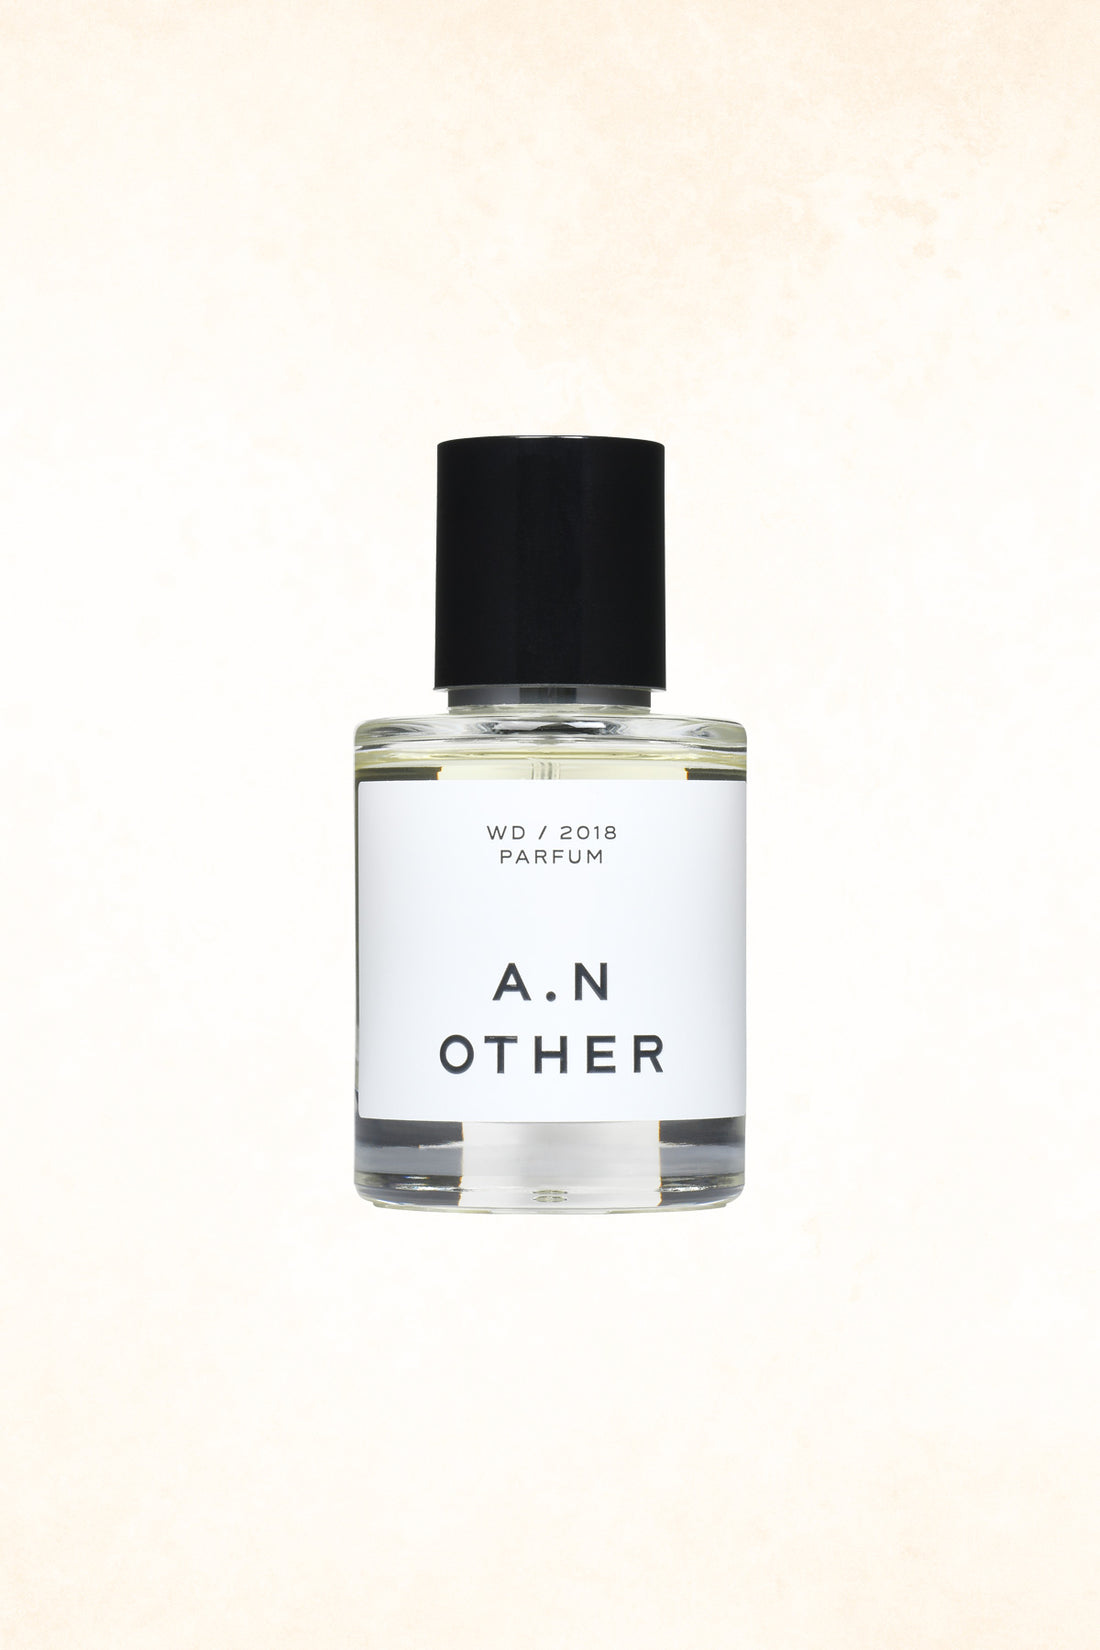 A.N OTHER – WD/2018 Parfum - 50 ml